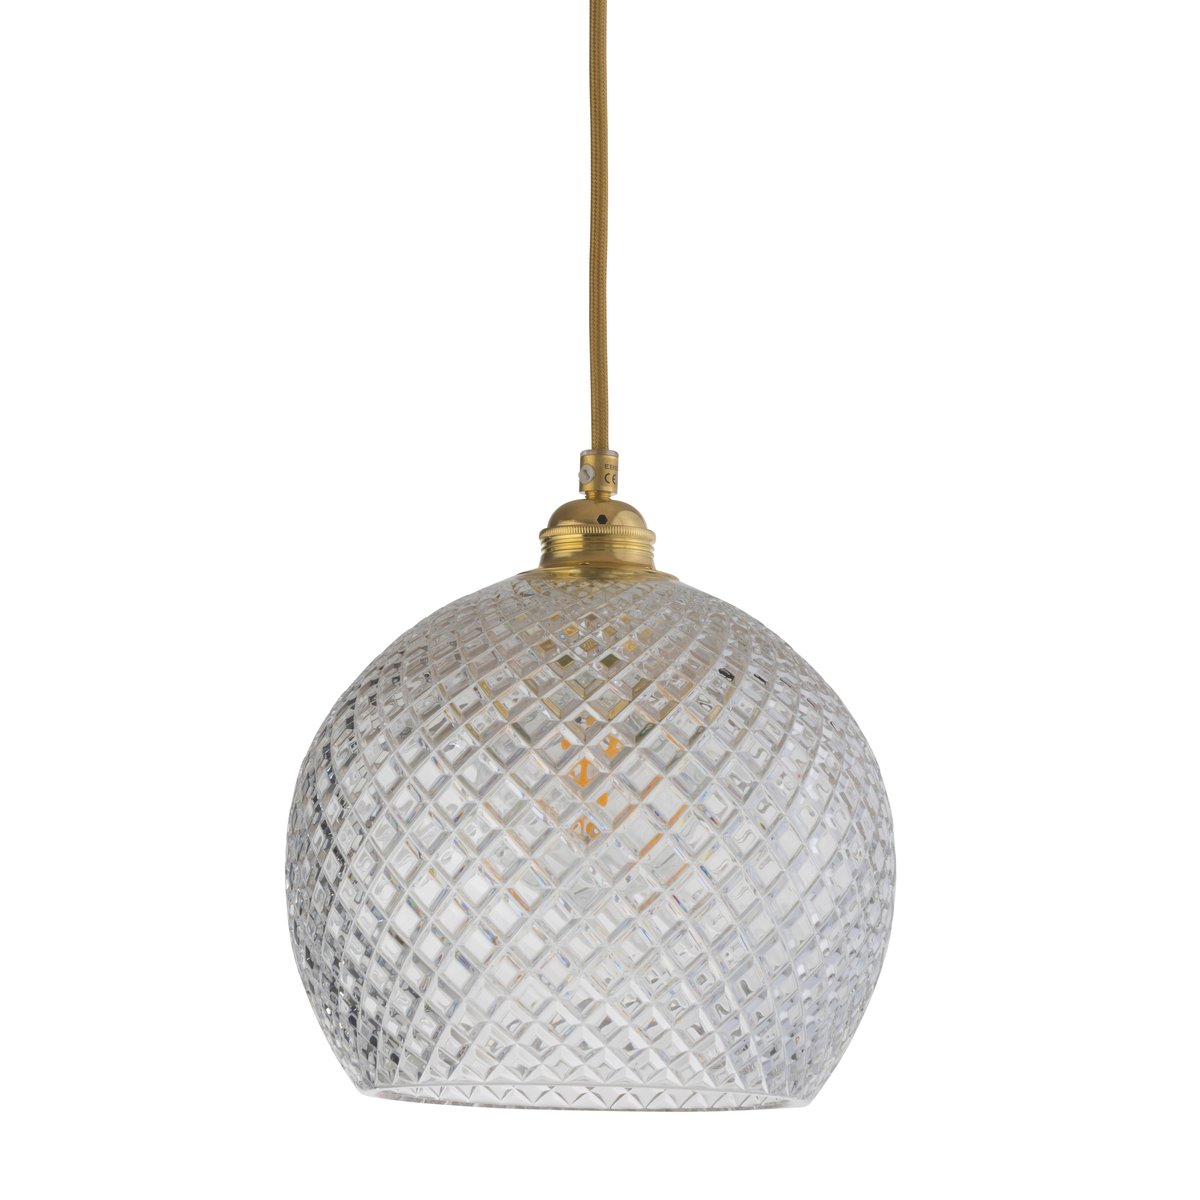 EBB & FLOW Rowan hanglamp Crystal Ø 22 cm. Small check - gouden snoer